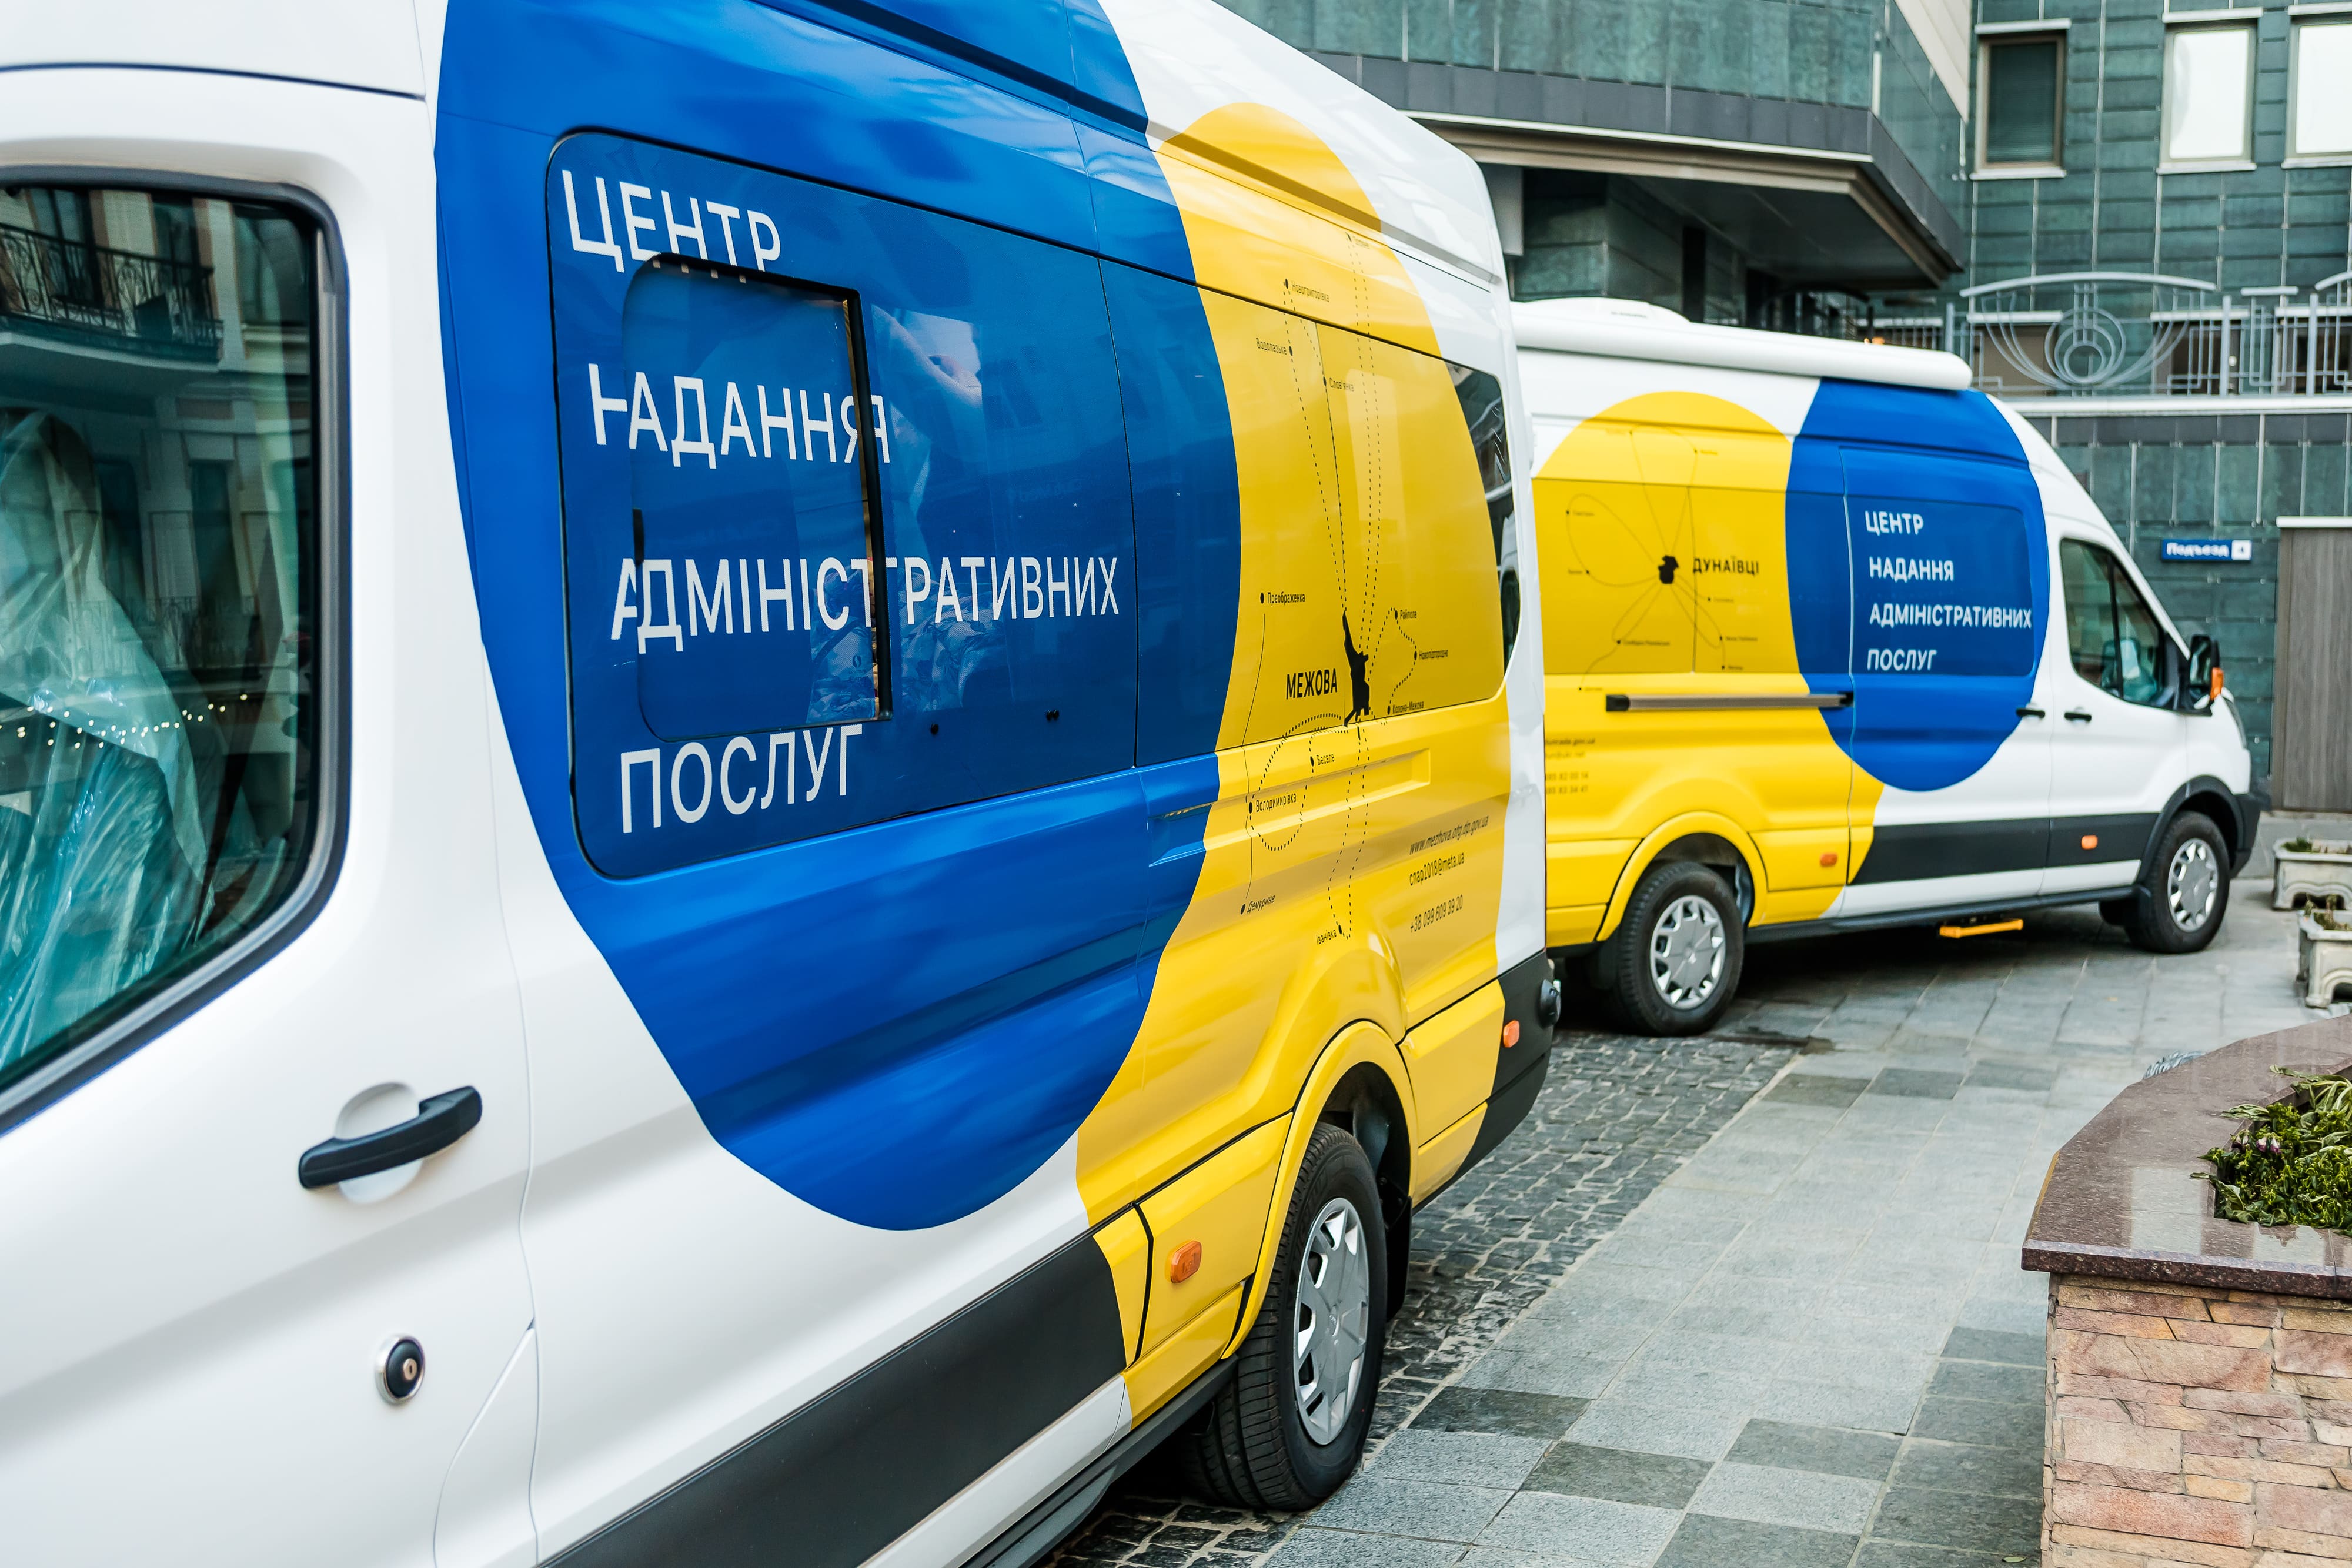 EU and Government representatives presented the keys of two mobile Administrative Service Centres to heads of hromadas